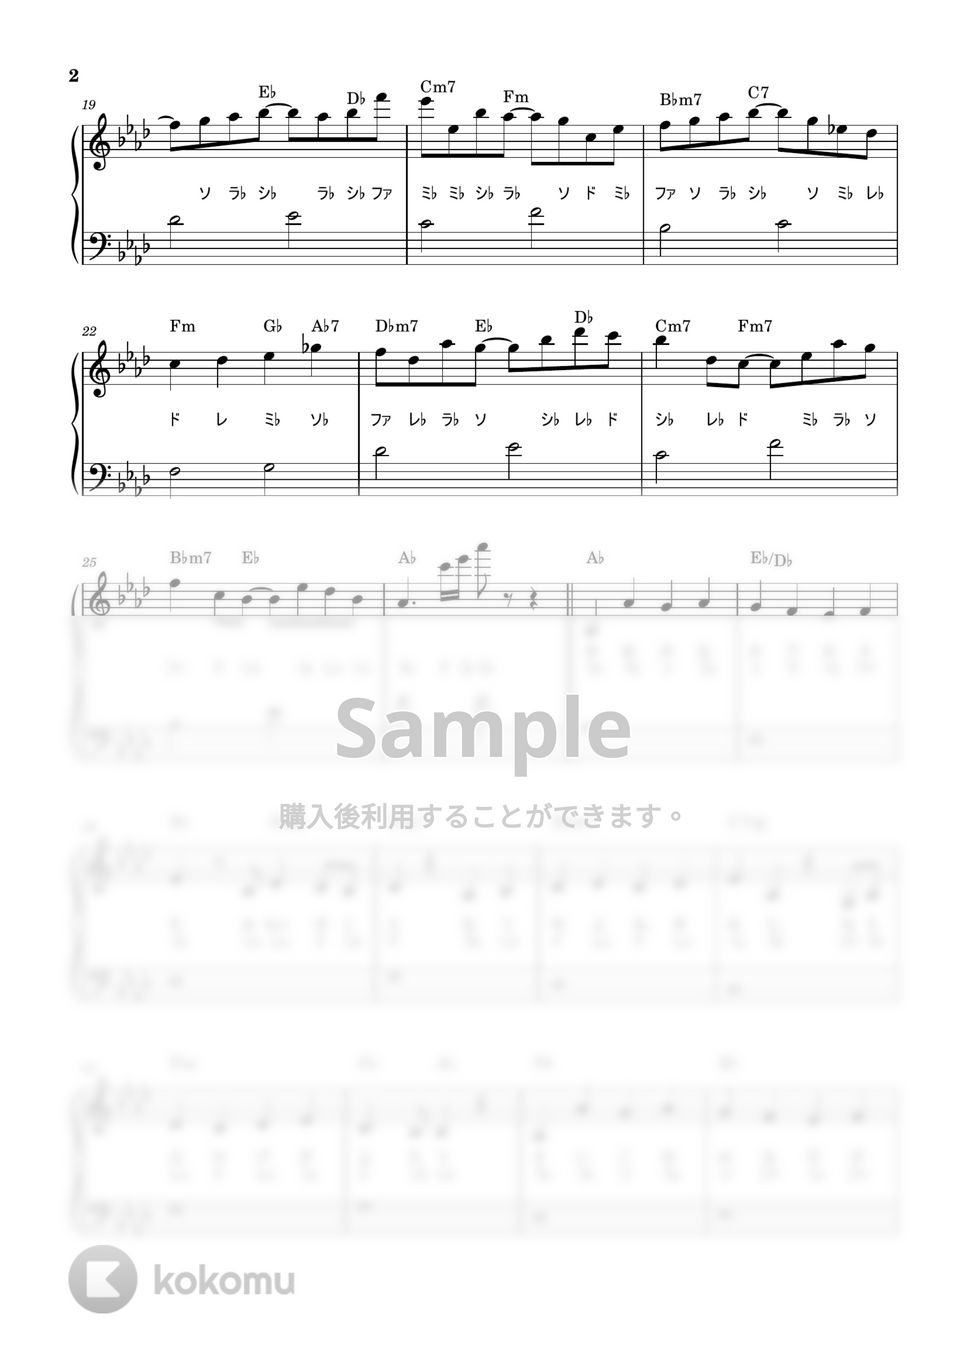 YOASOBI - あの夢をなぞって (かんたん / 歌詞付き / ドレミ付き / 初心者) by piano.tokyo